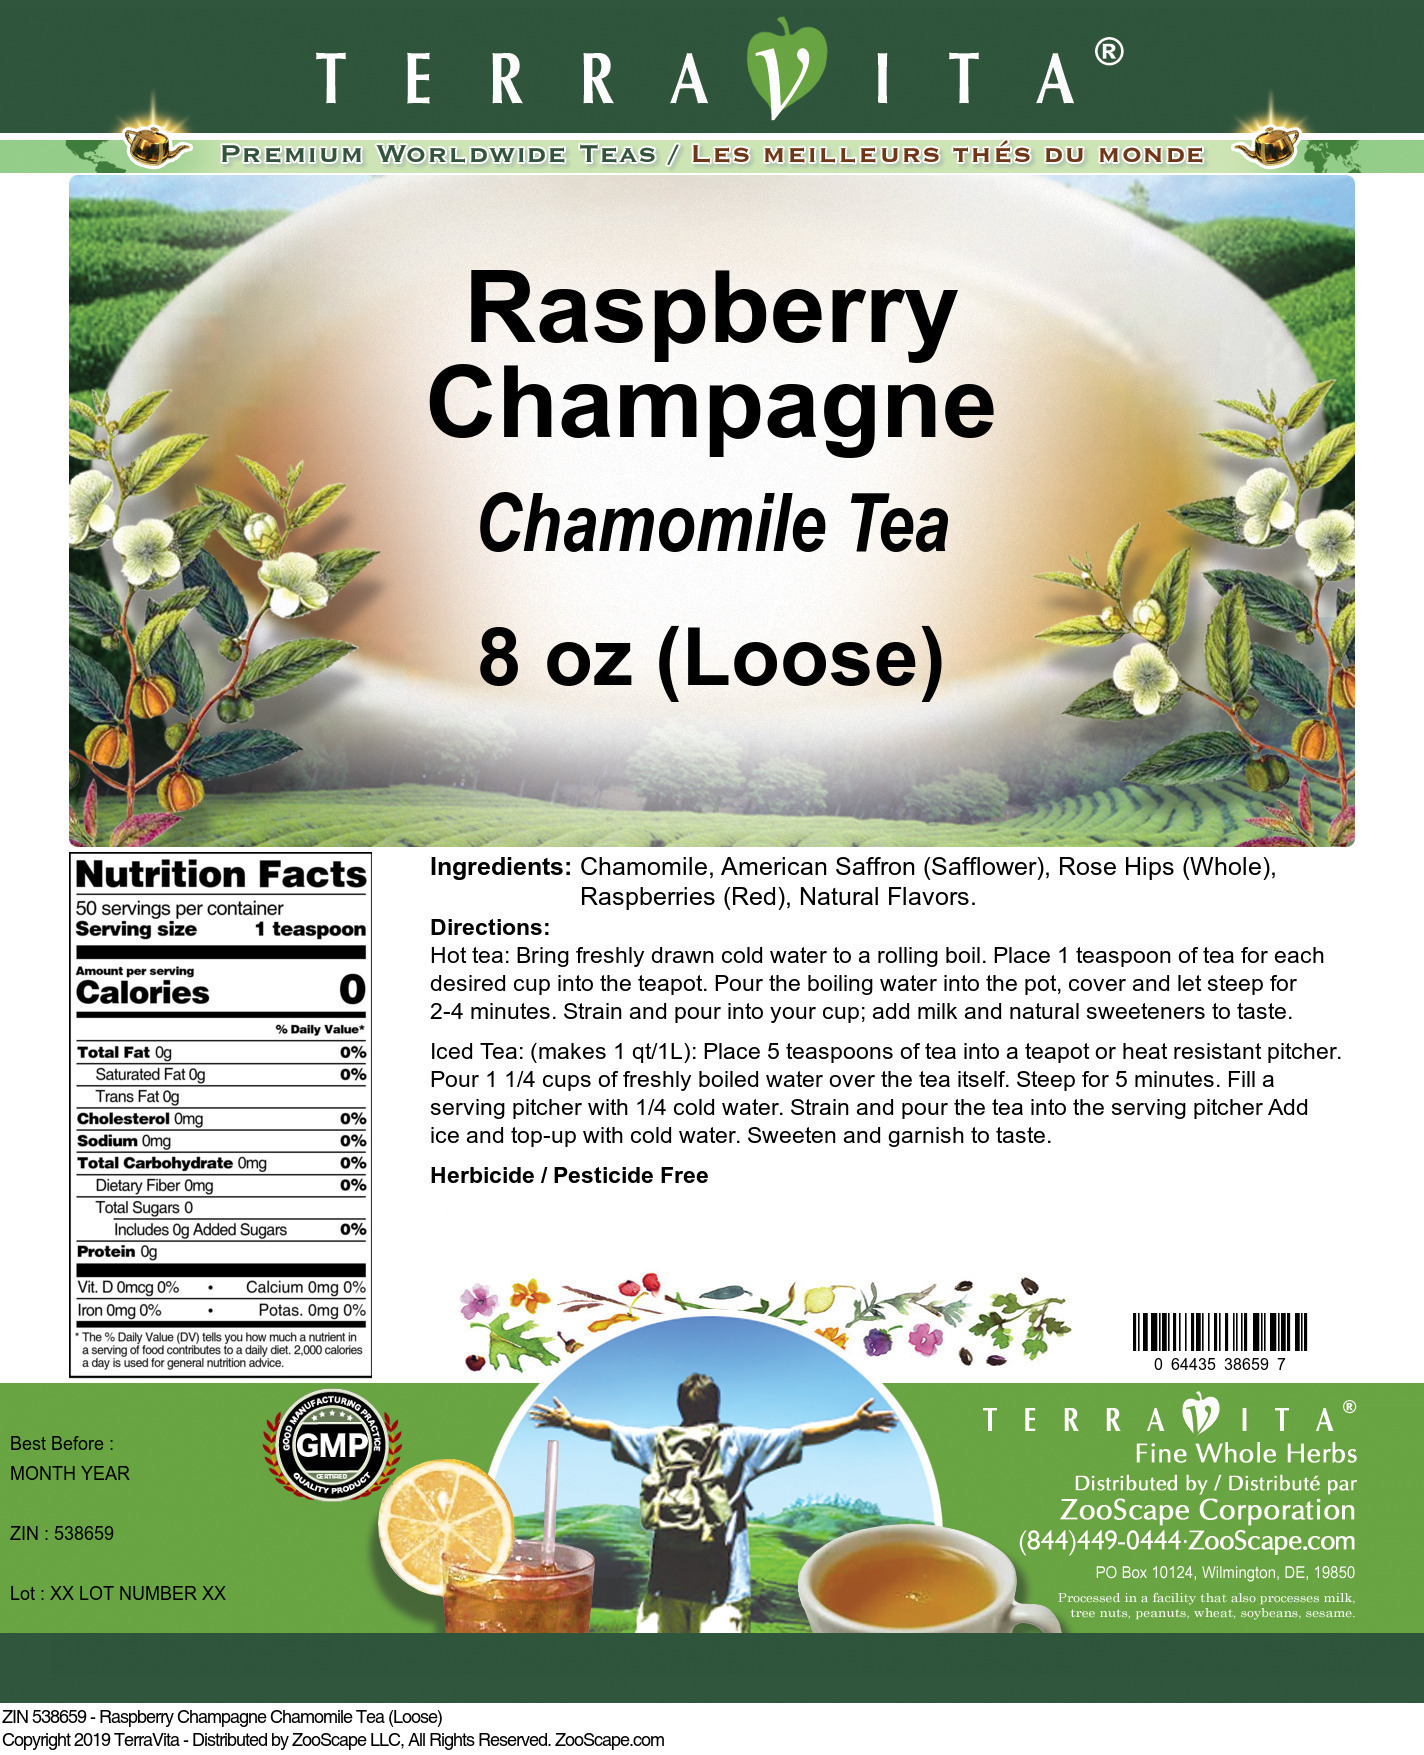 Raspberry Champagne Chamomile Tea (Loose) - Label